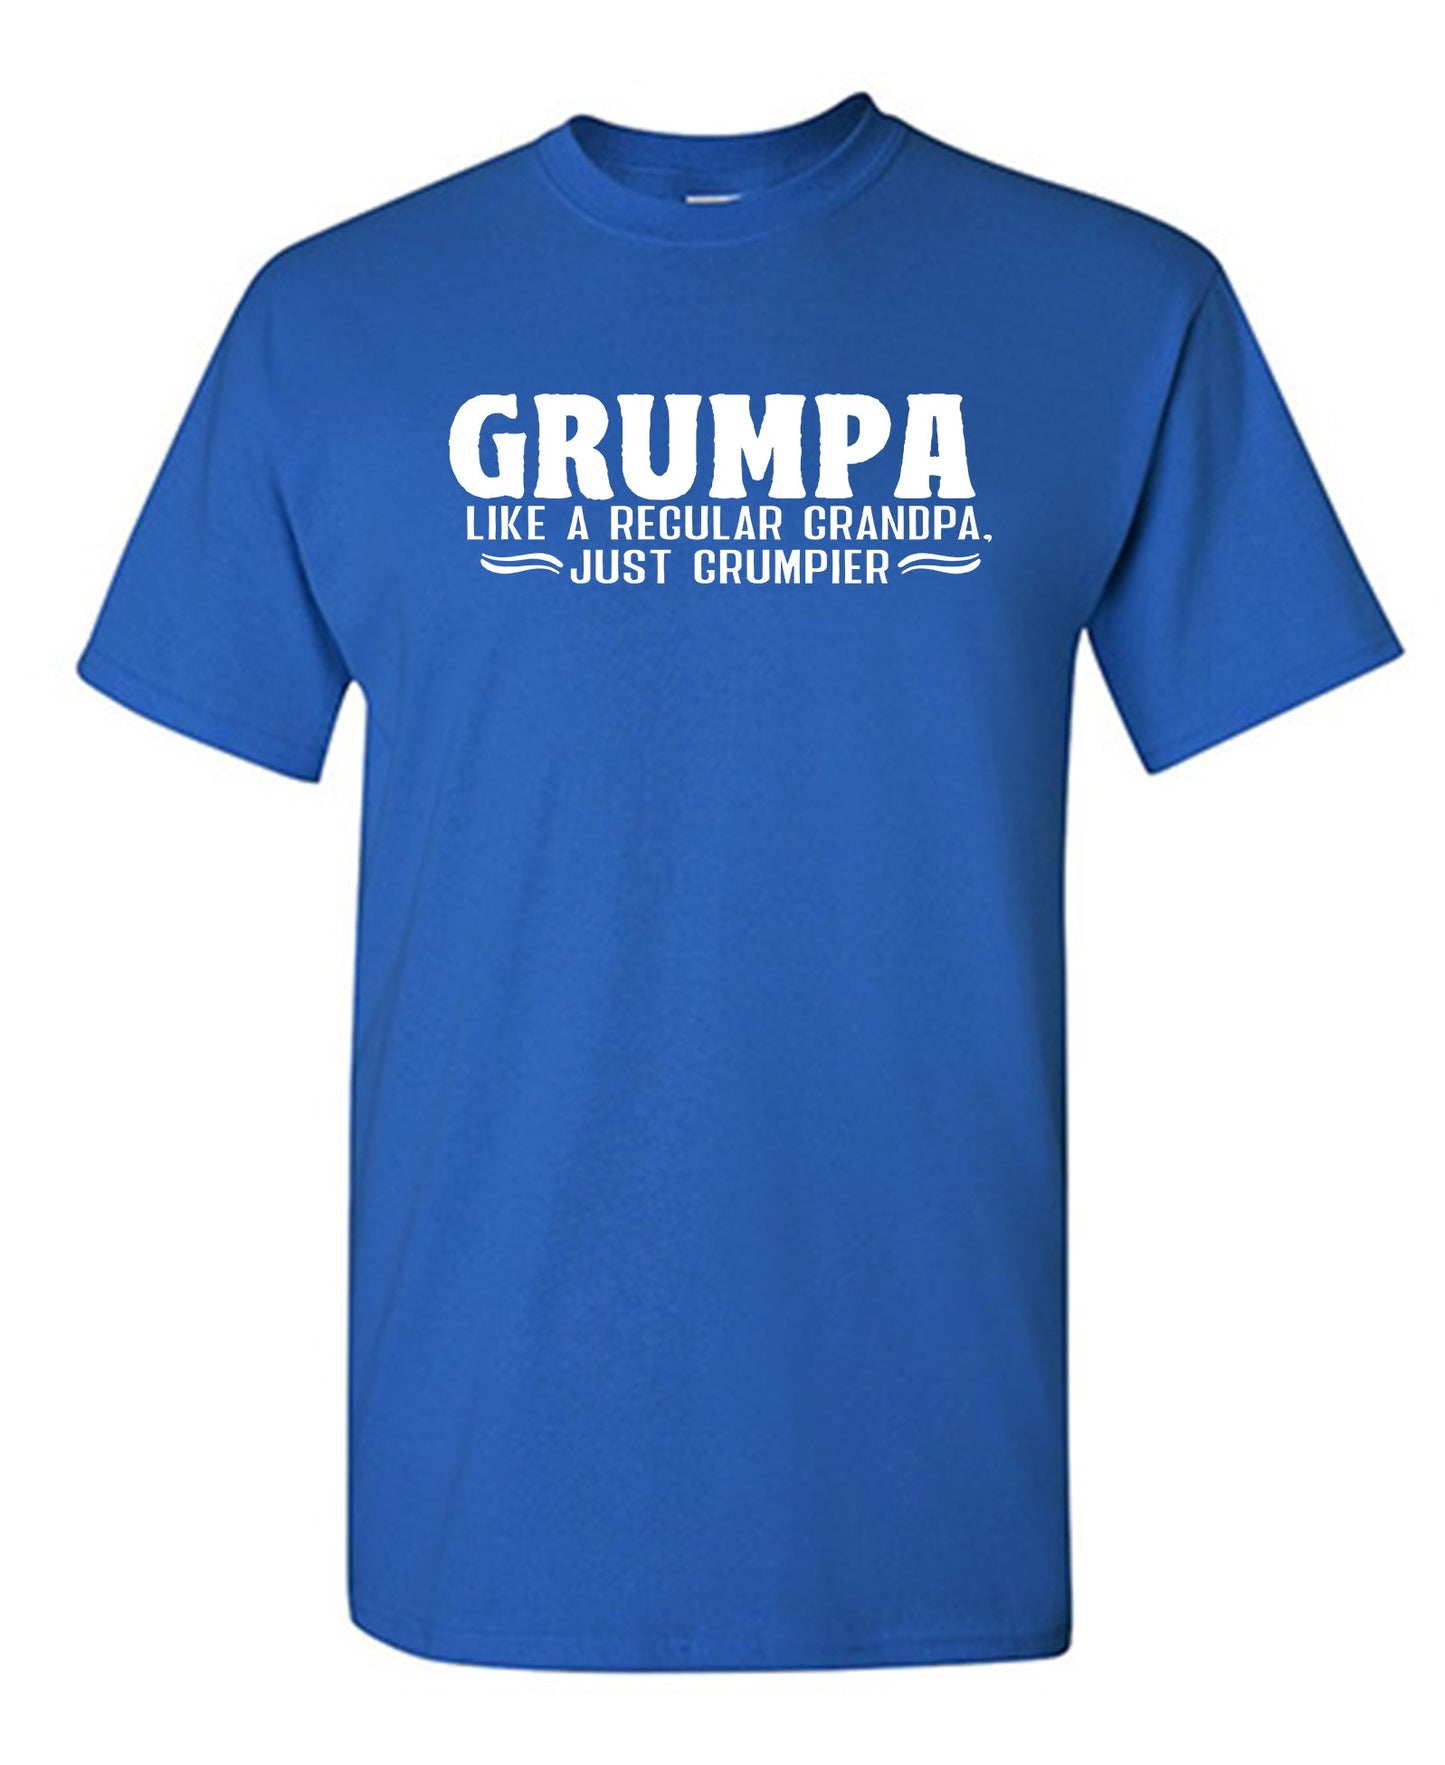 Grumpa, Like A Regular Grandpa, Just Grumpier - Funny T Shirts & Graphic Tees